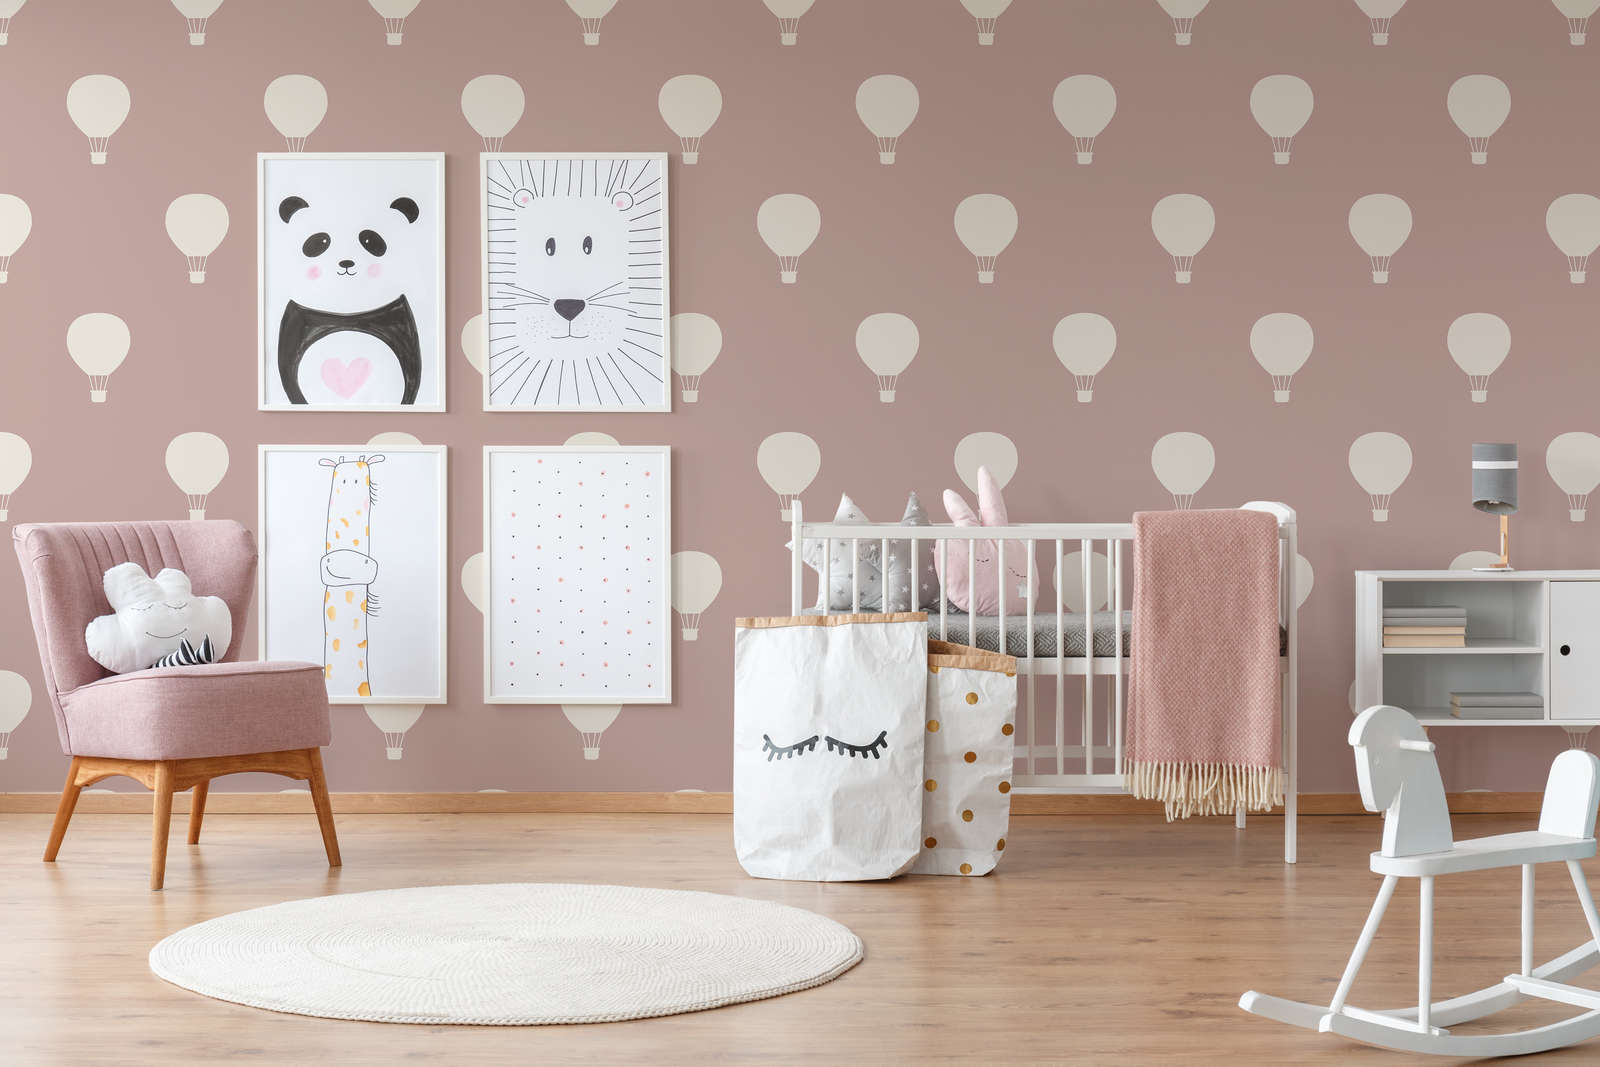             Nursery wallpaper with hot balloon motif - cream, pink
        